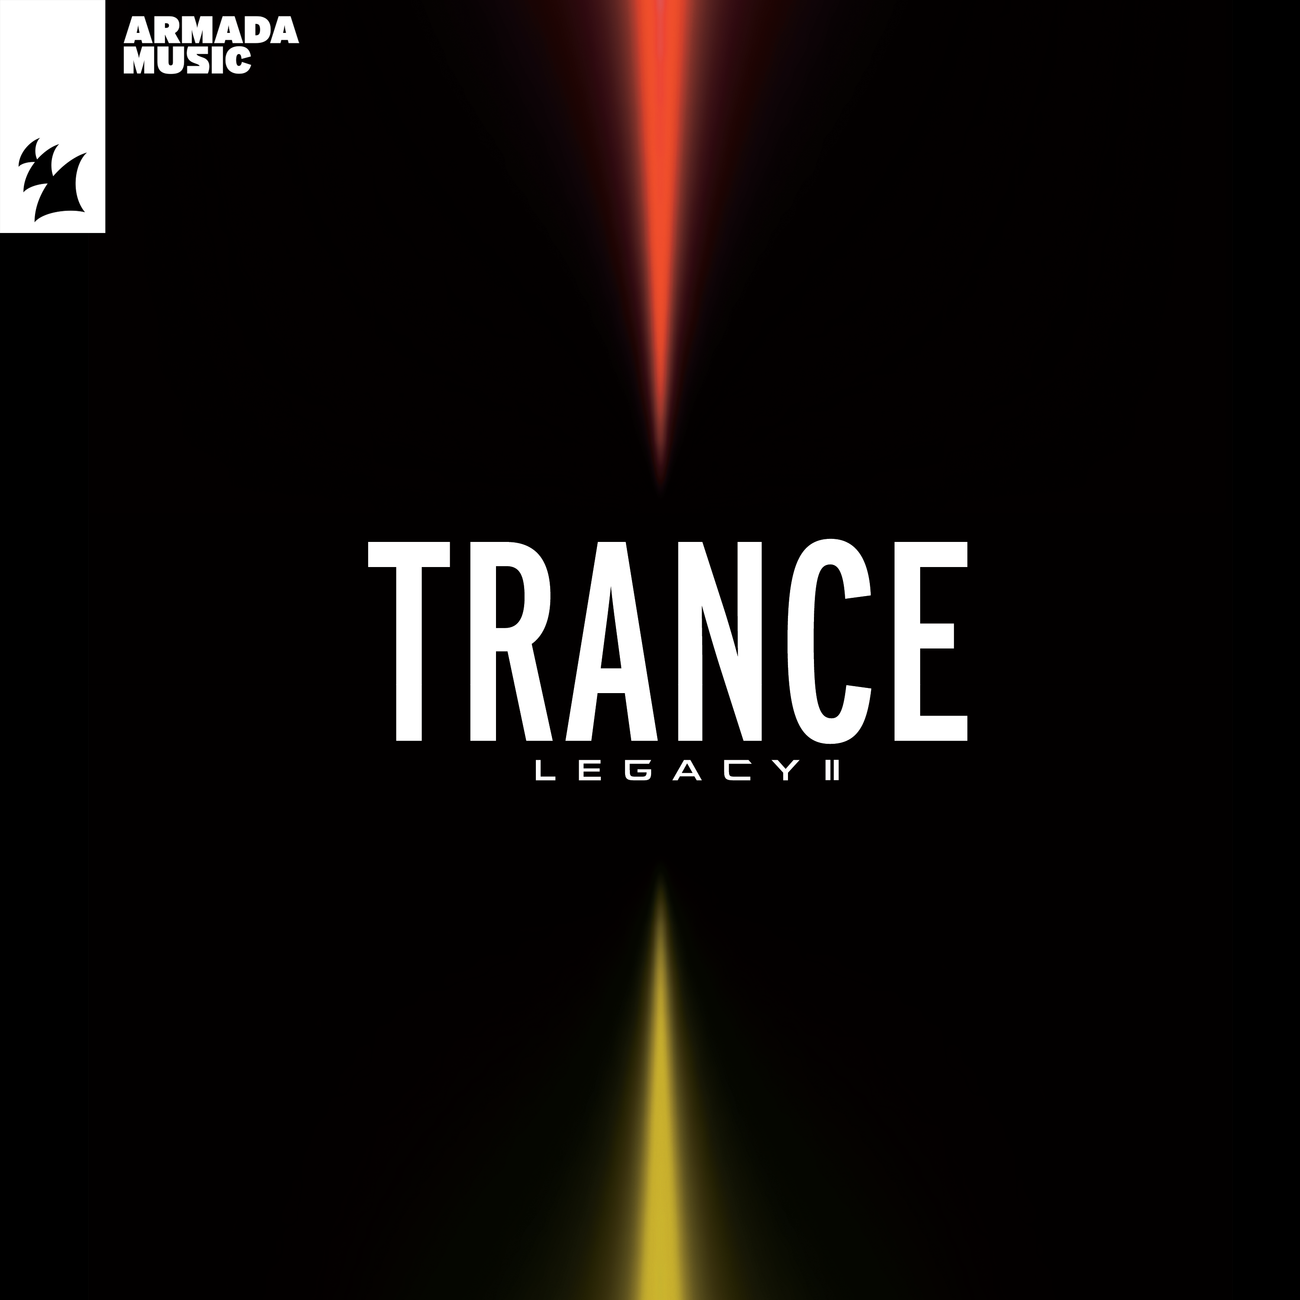 Armada Music - Trance Legacy II (vinyl)